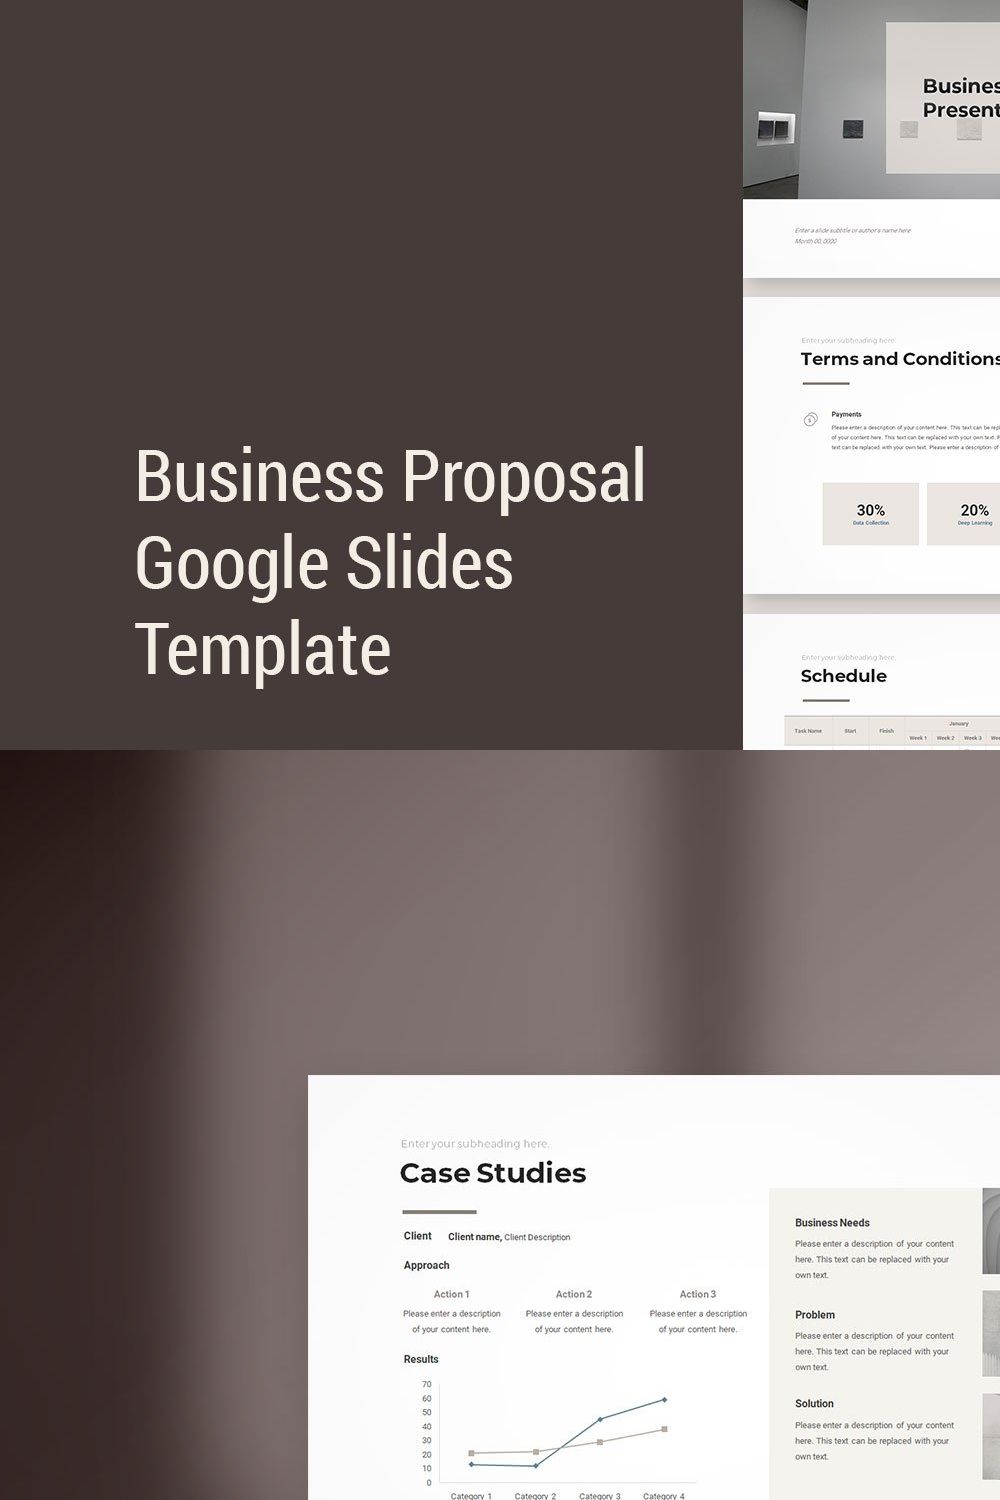 Business Proposal Google Slides pinterest preview image.